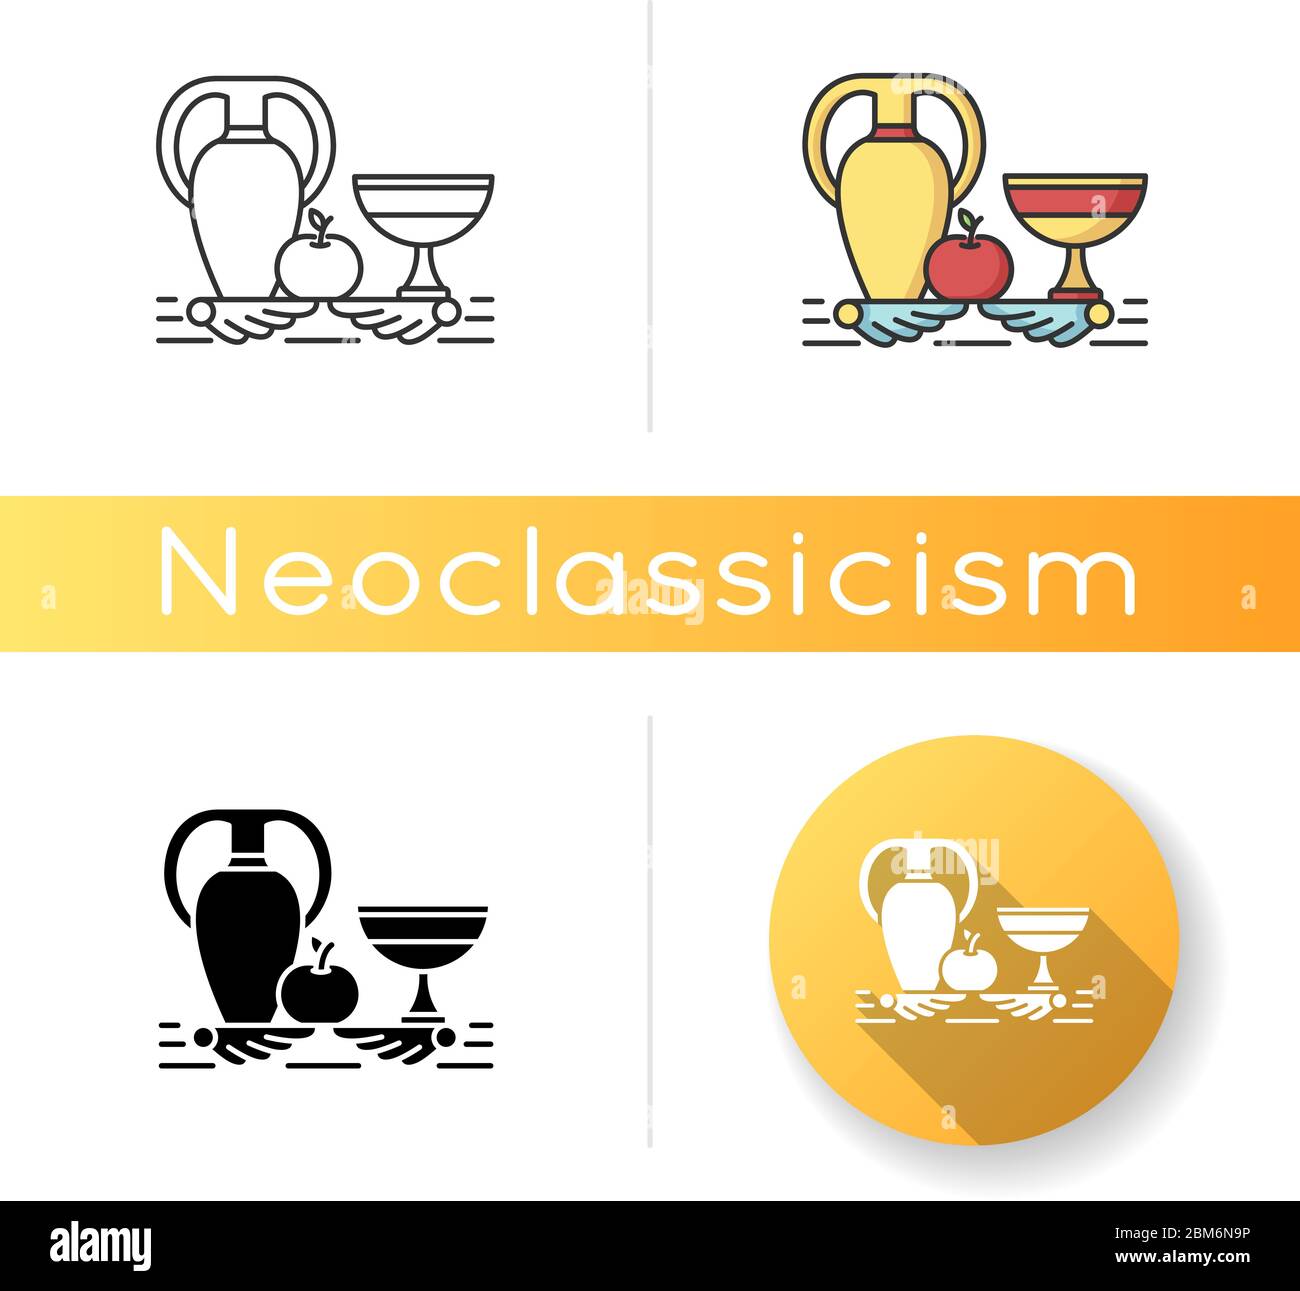 Neoclassicism icon Stock Vector